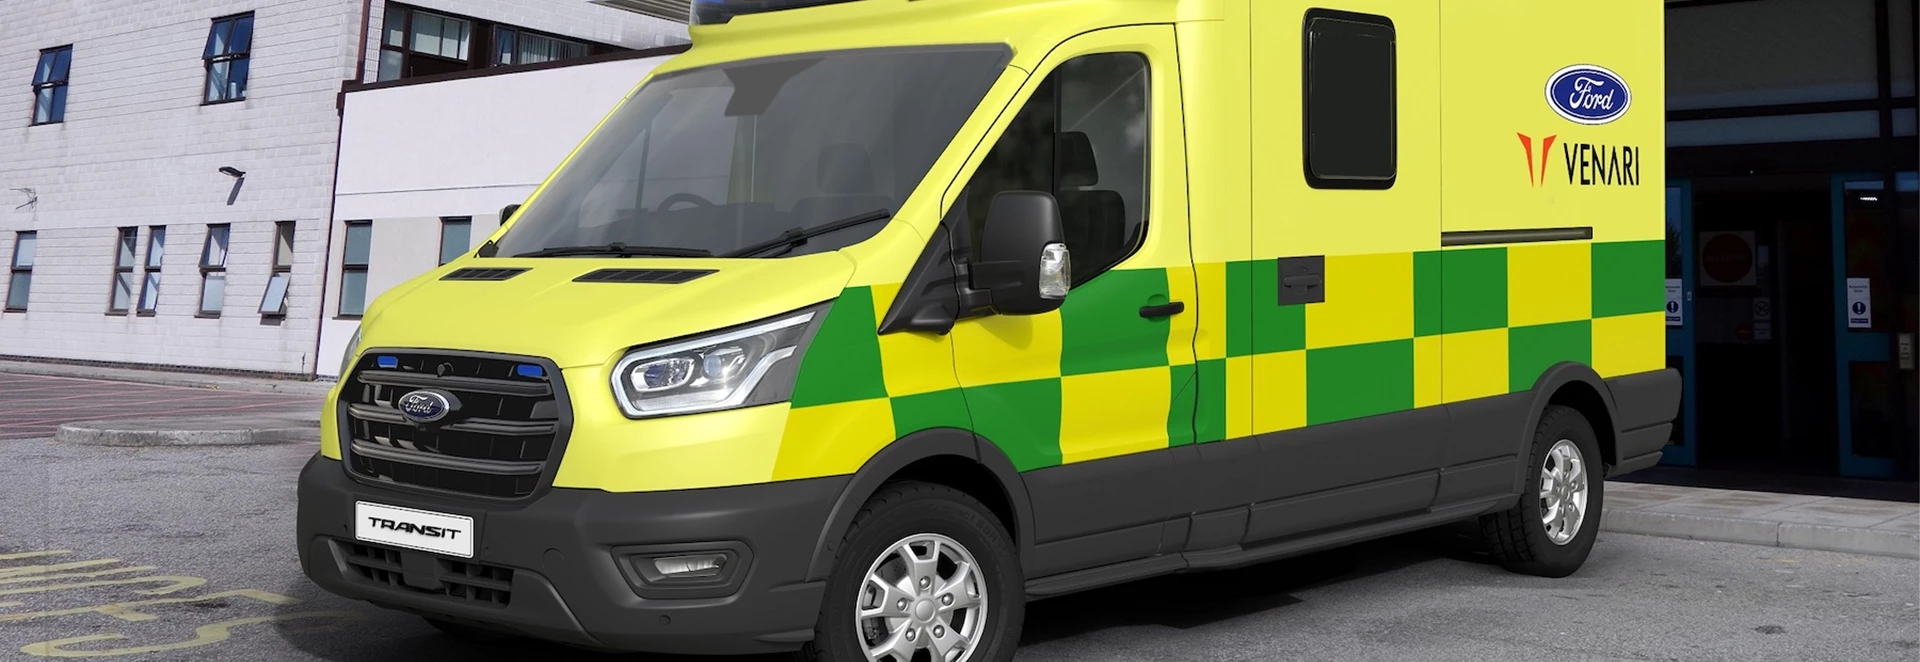 Ford unveils new Transit emergency vehicle as it looks to rejoin UK ambulance market 